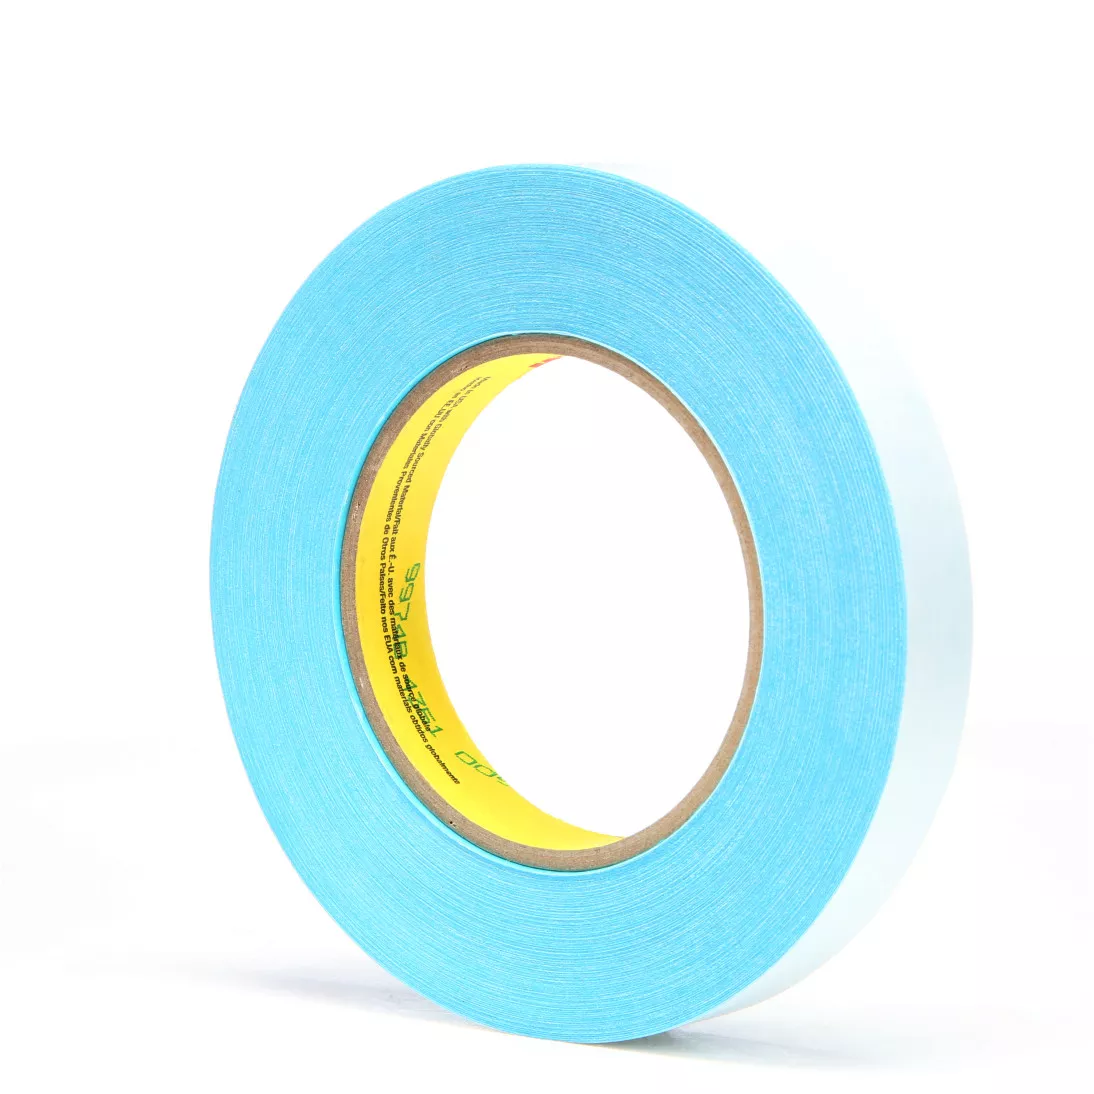 3M™ Repulpable Double Coated Tape 9974B, Blue, 18 mm x 55 m, 3.3 mil, 48
rolls per case